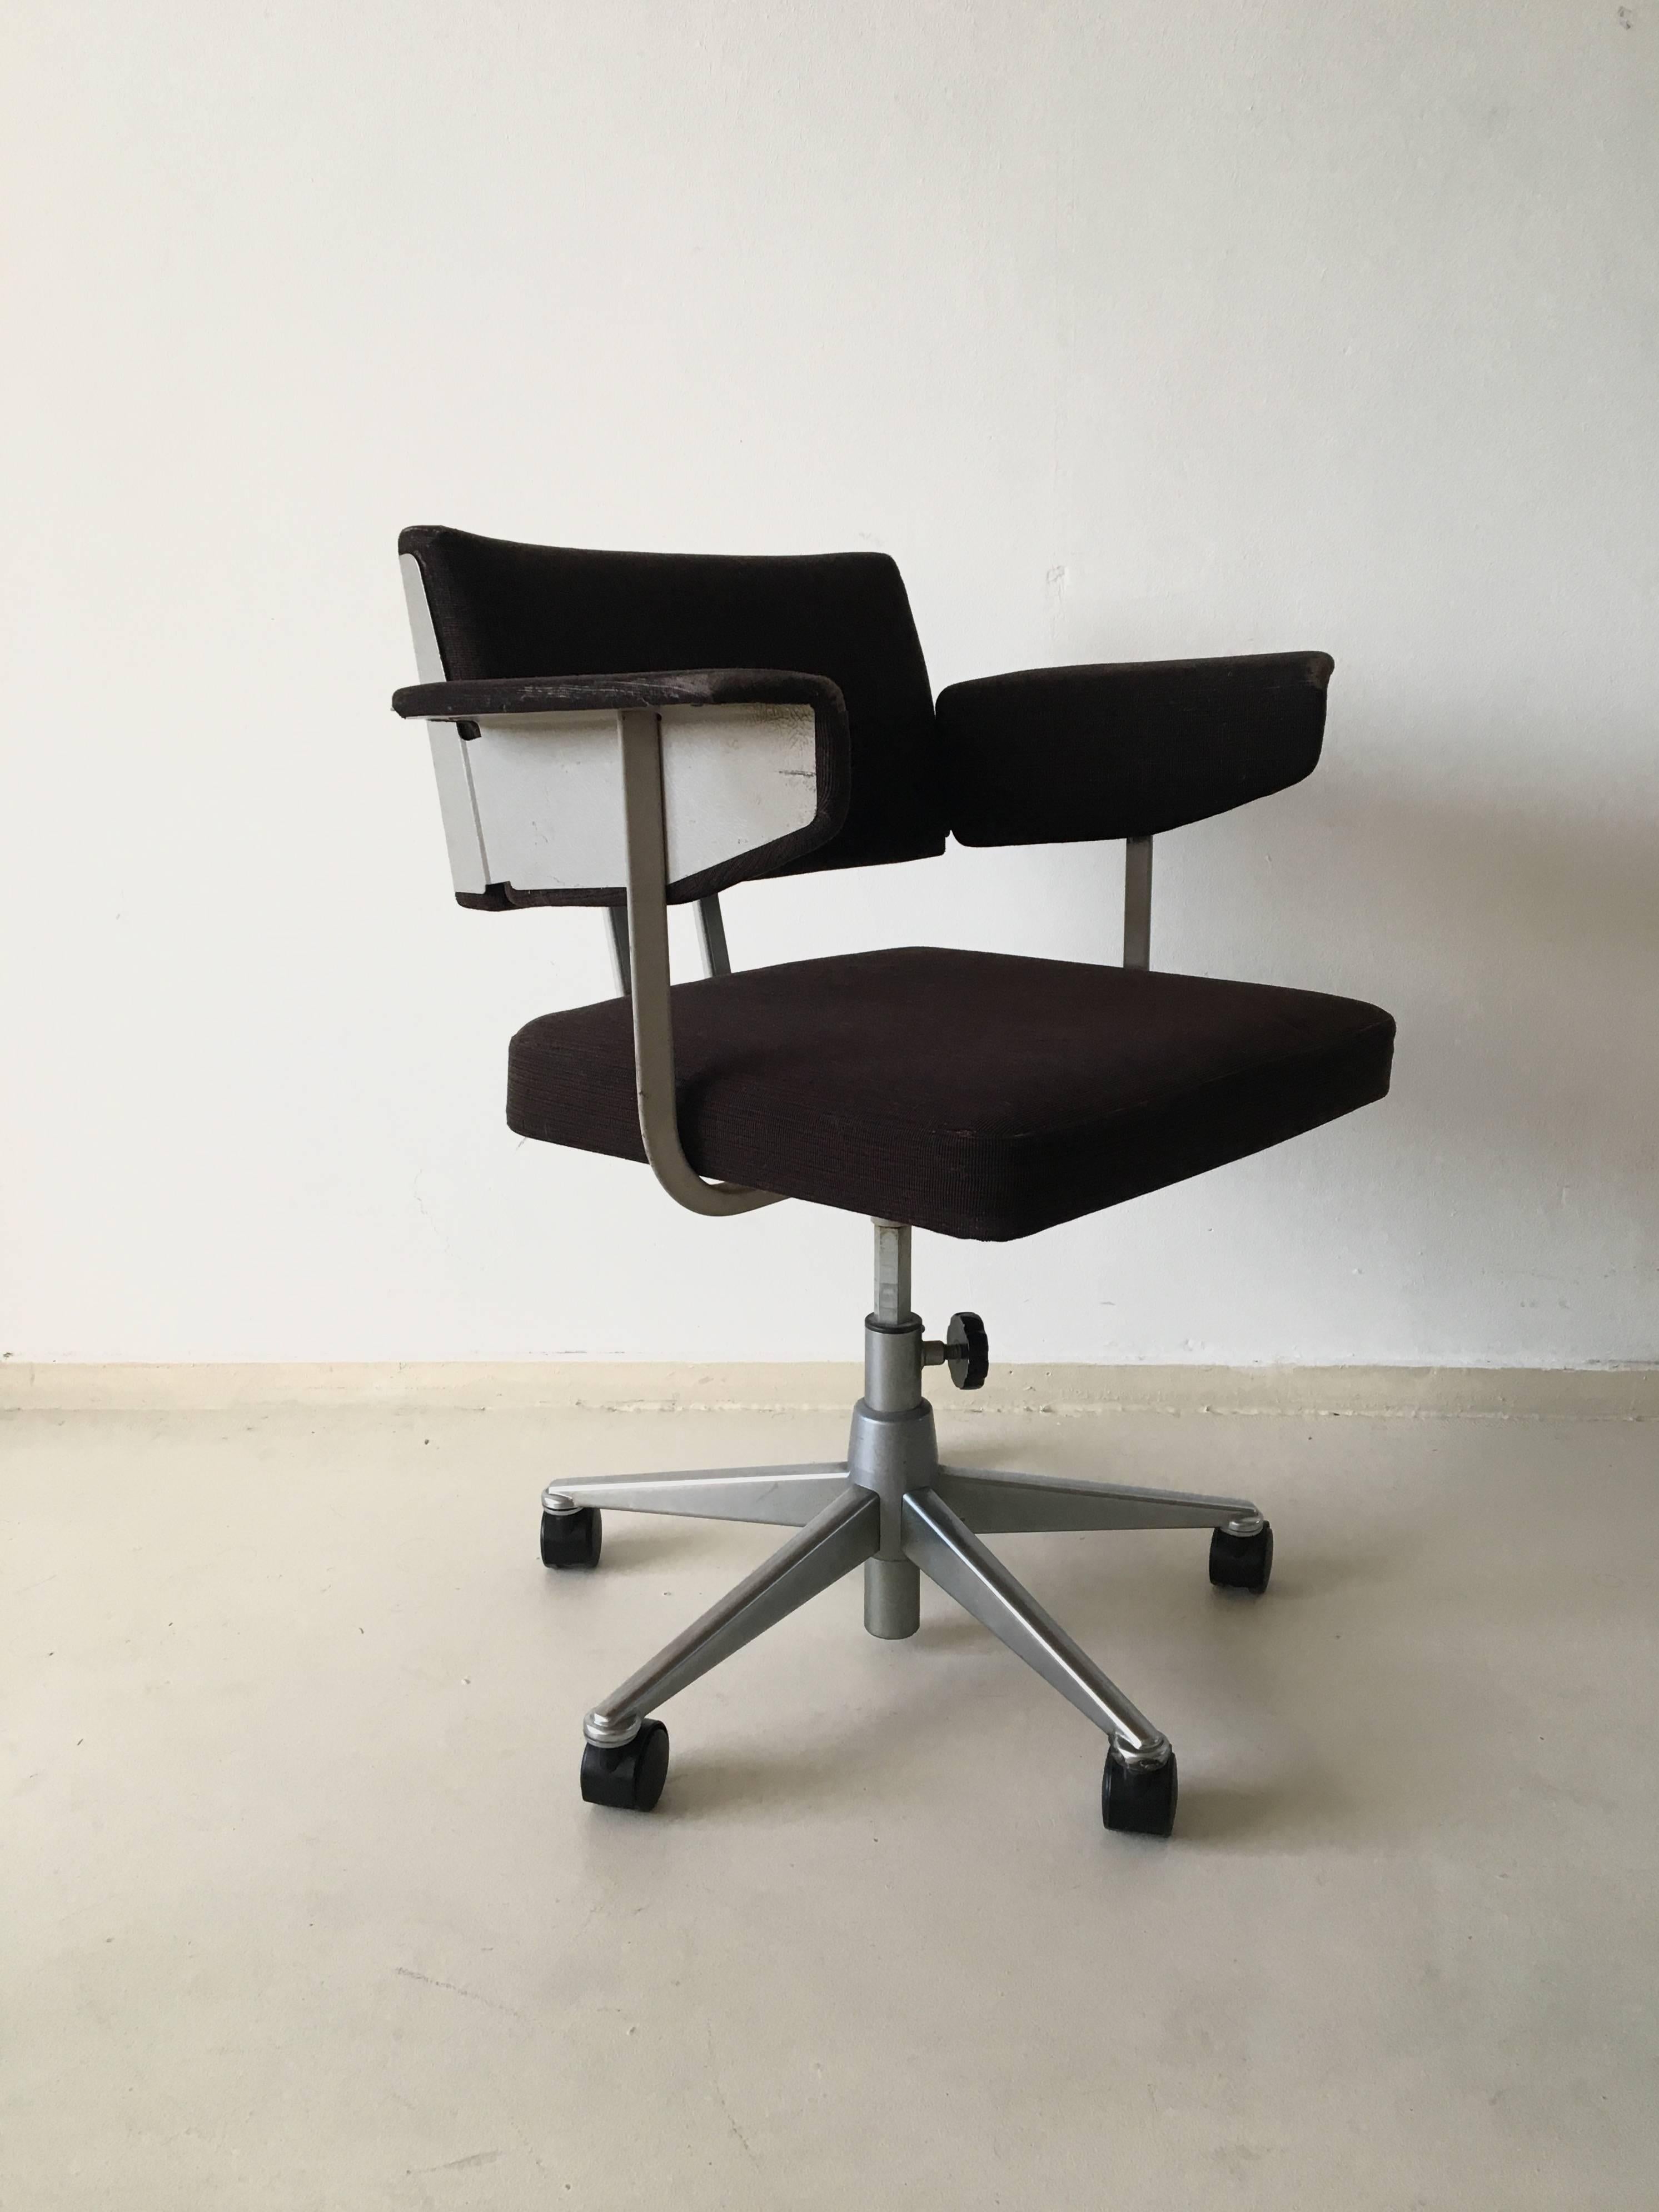 Dutch Industrial Desk Chair by Friso Kramer for Ahrend de Cirkel, 1973